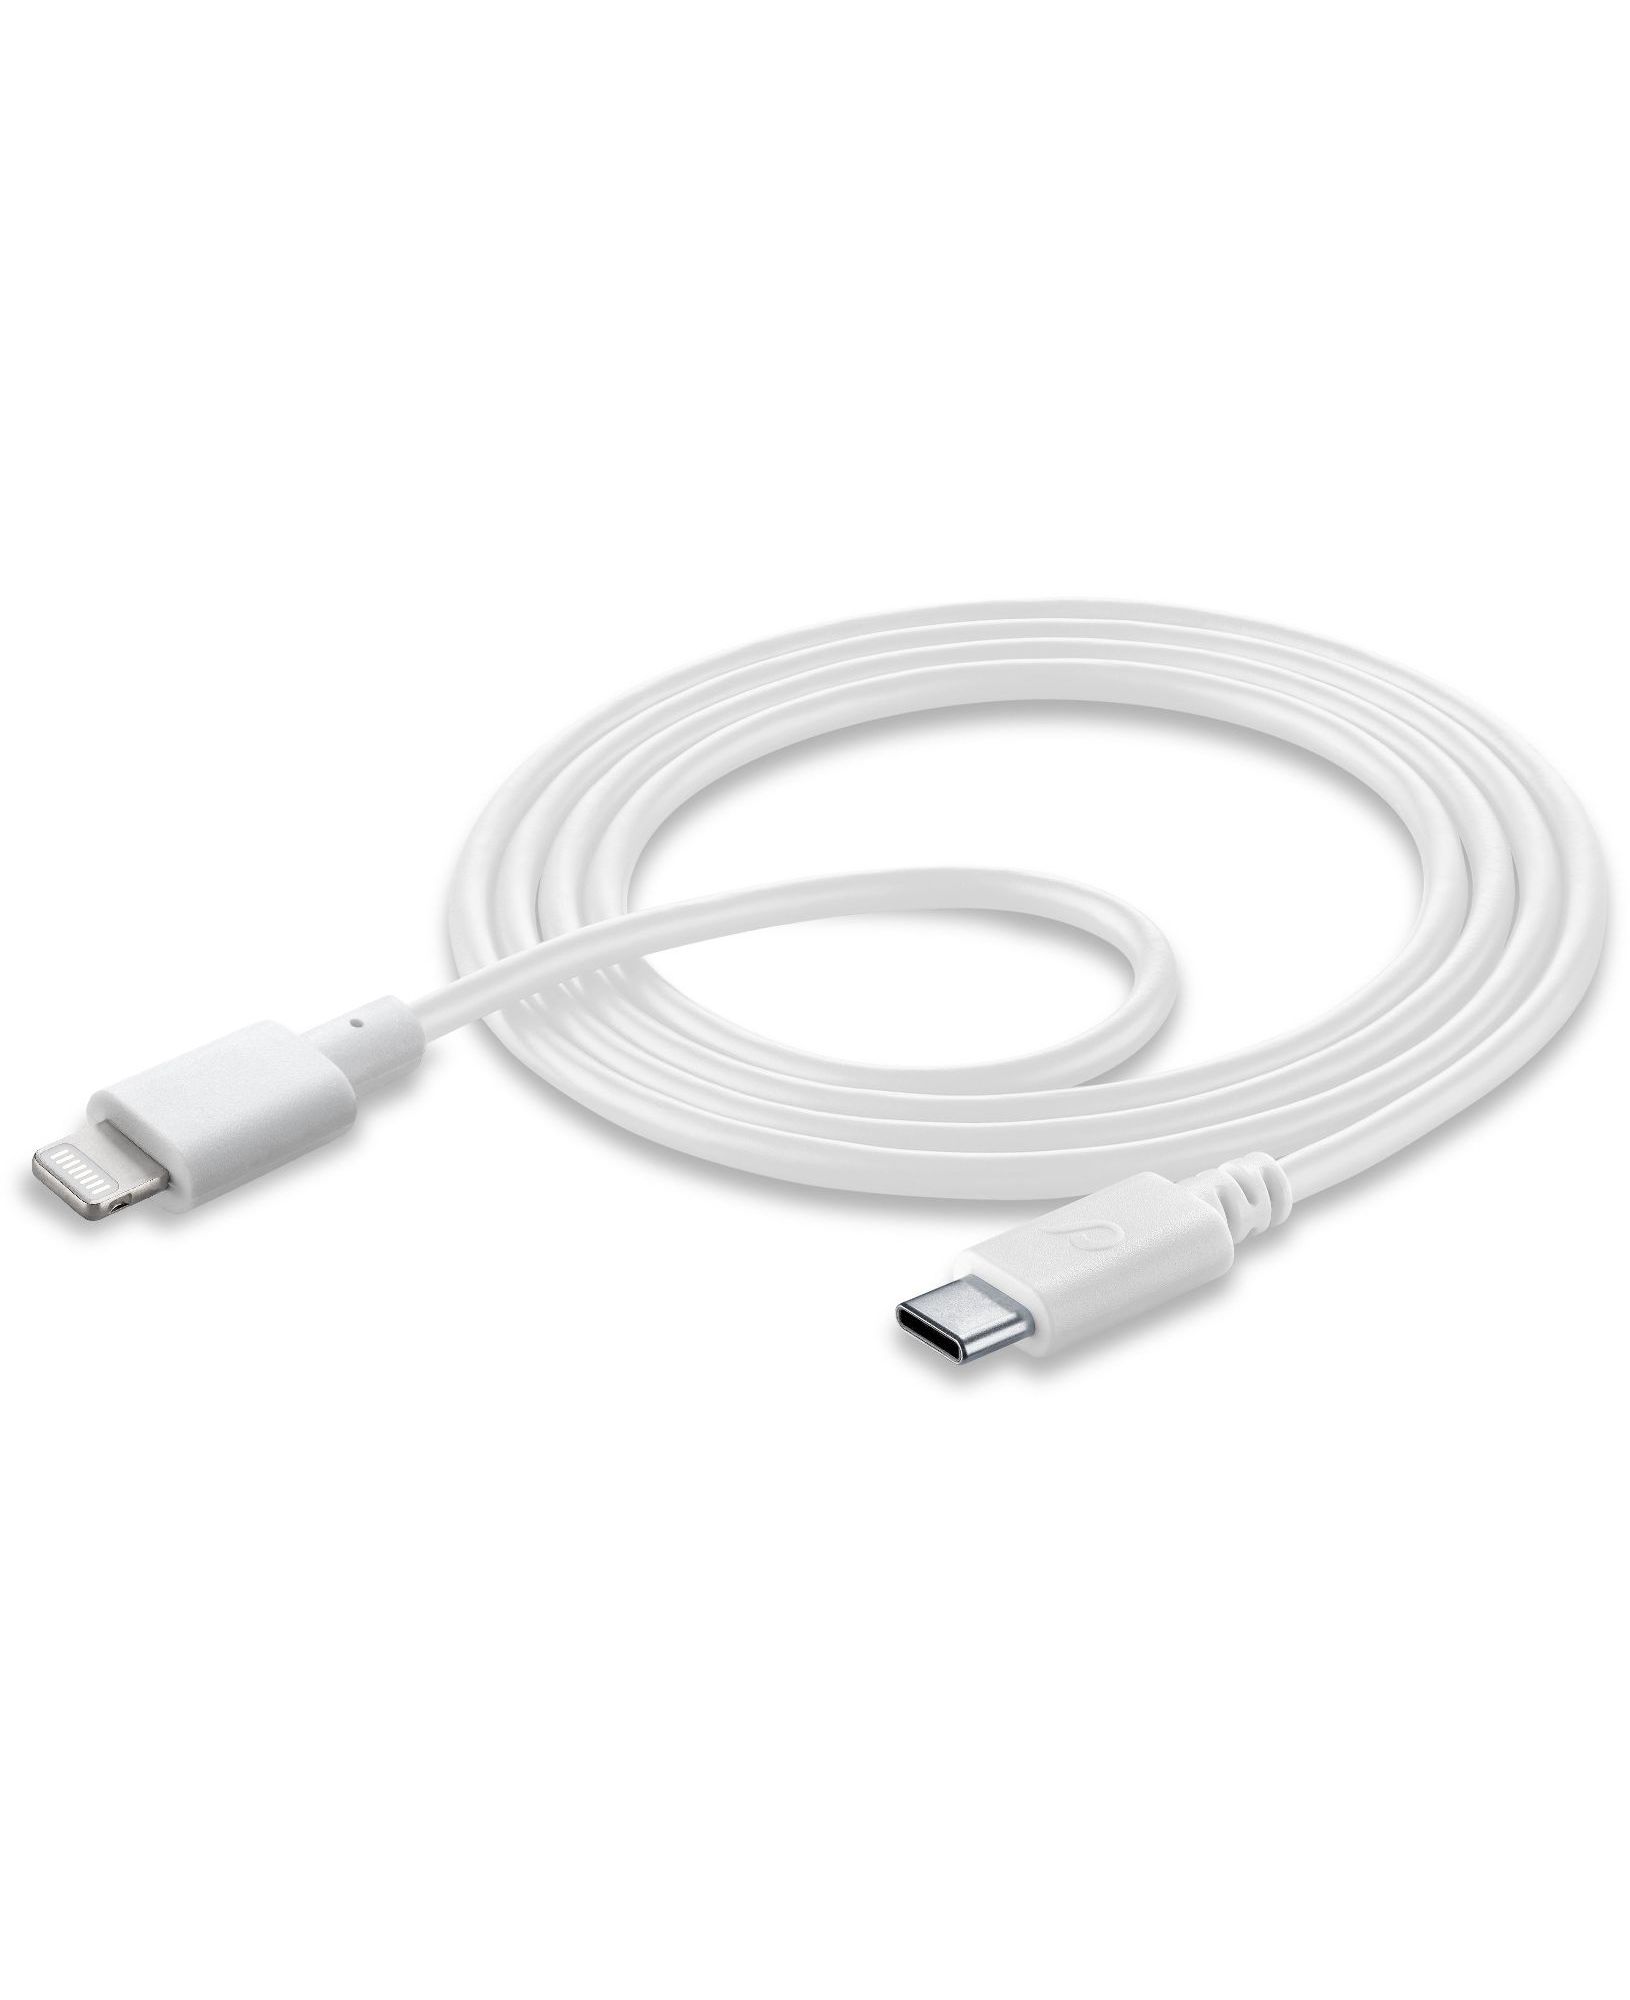 Usb kabel, usb-c to Apple lightning 1,2m, wit